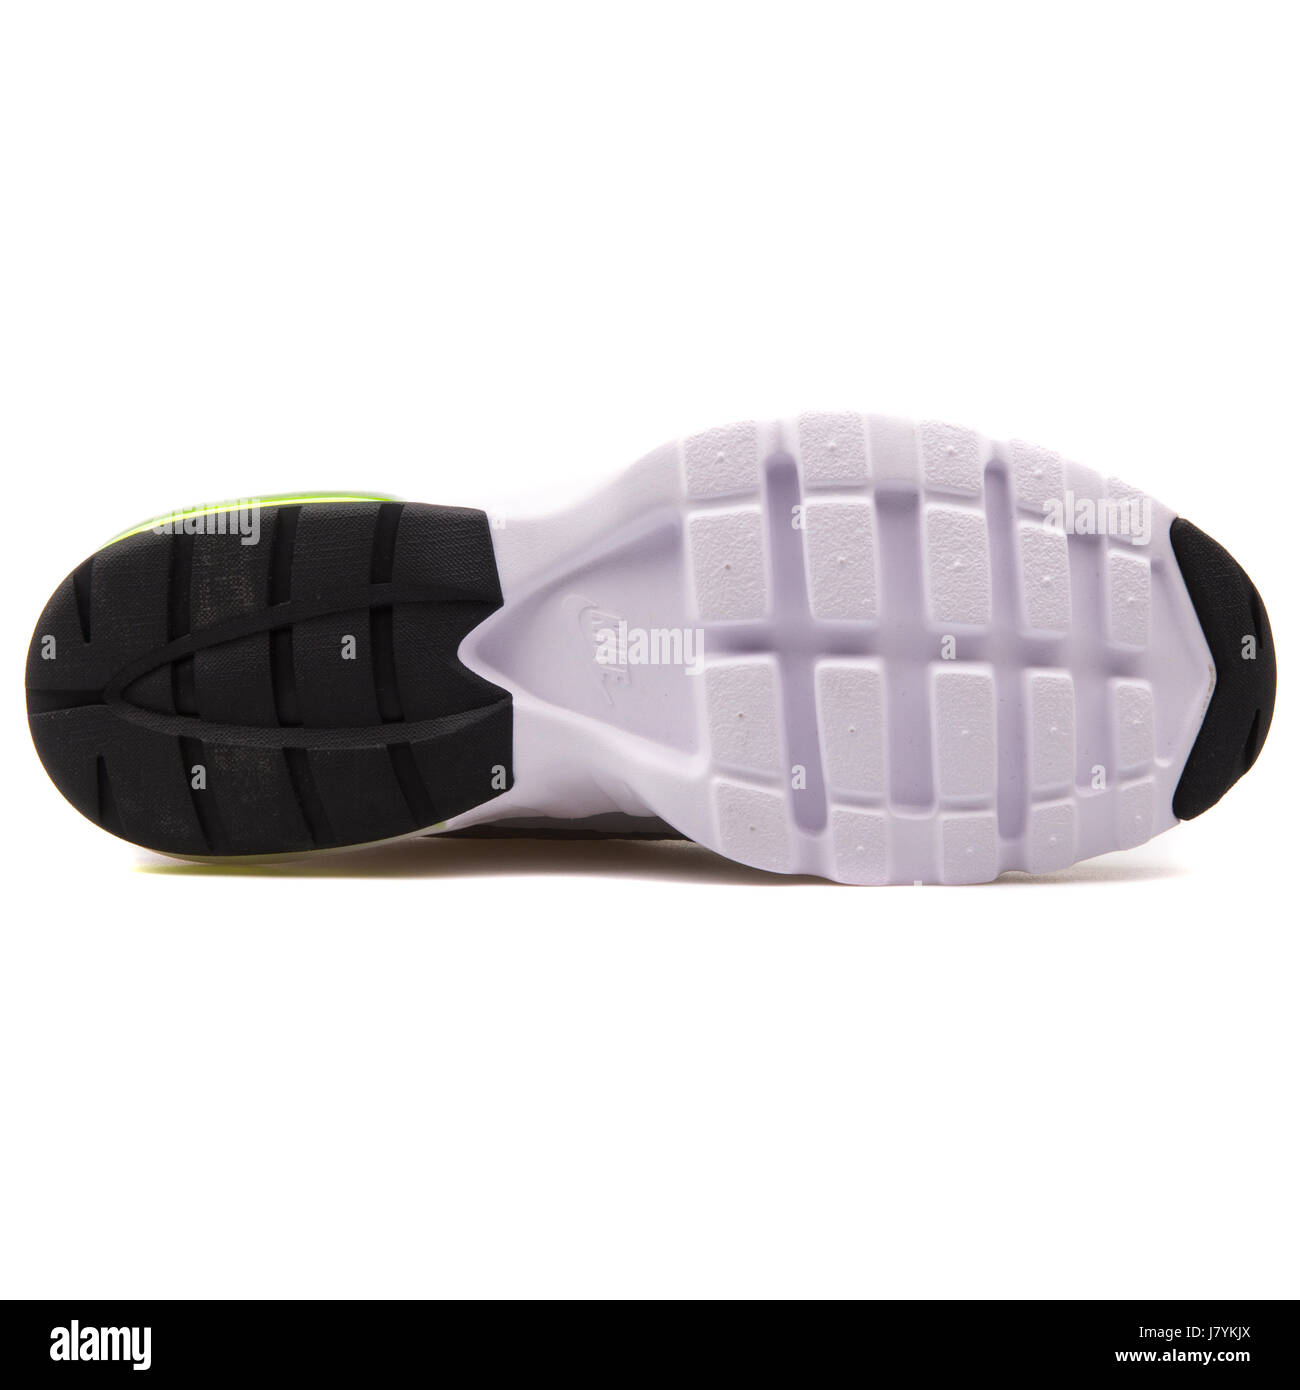 Nike WMNS Air Max 95 Ultra Frauen laufen grauen Sneaker - 749212-002  Stockfotografie - Alamy